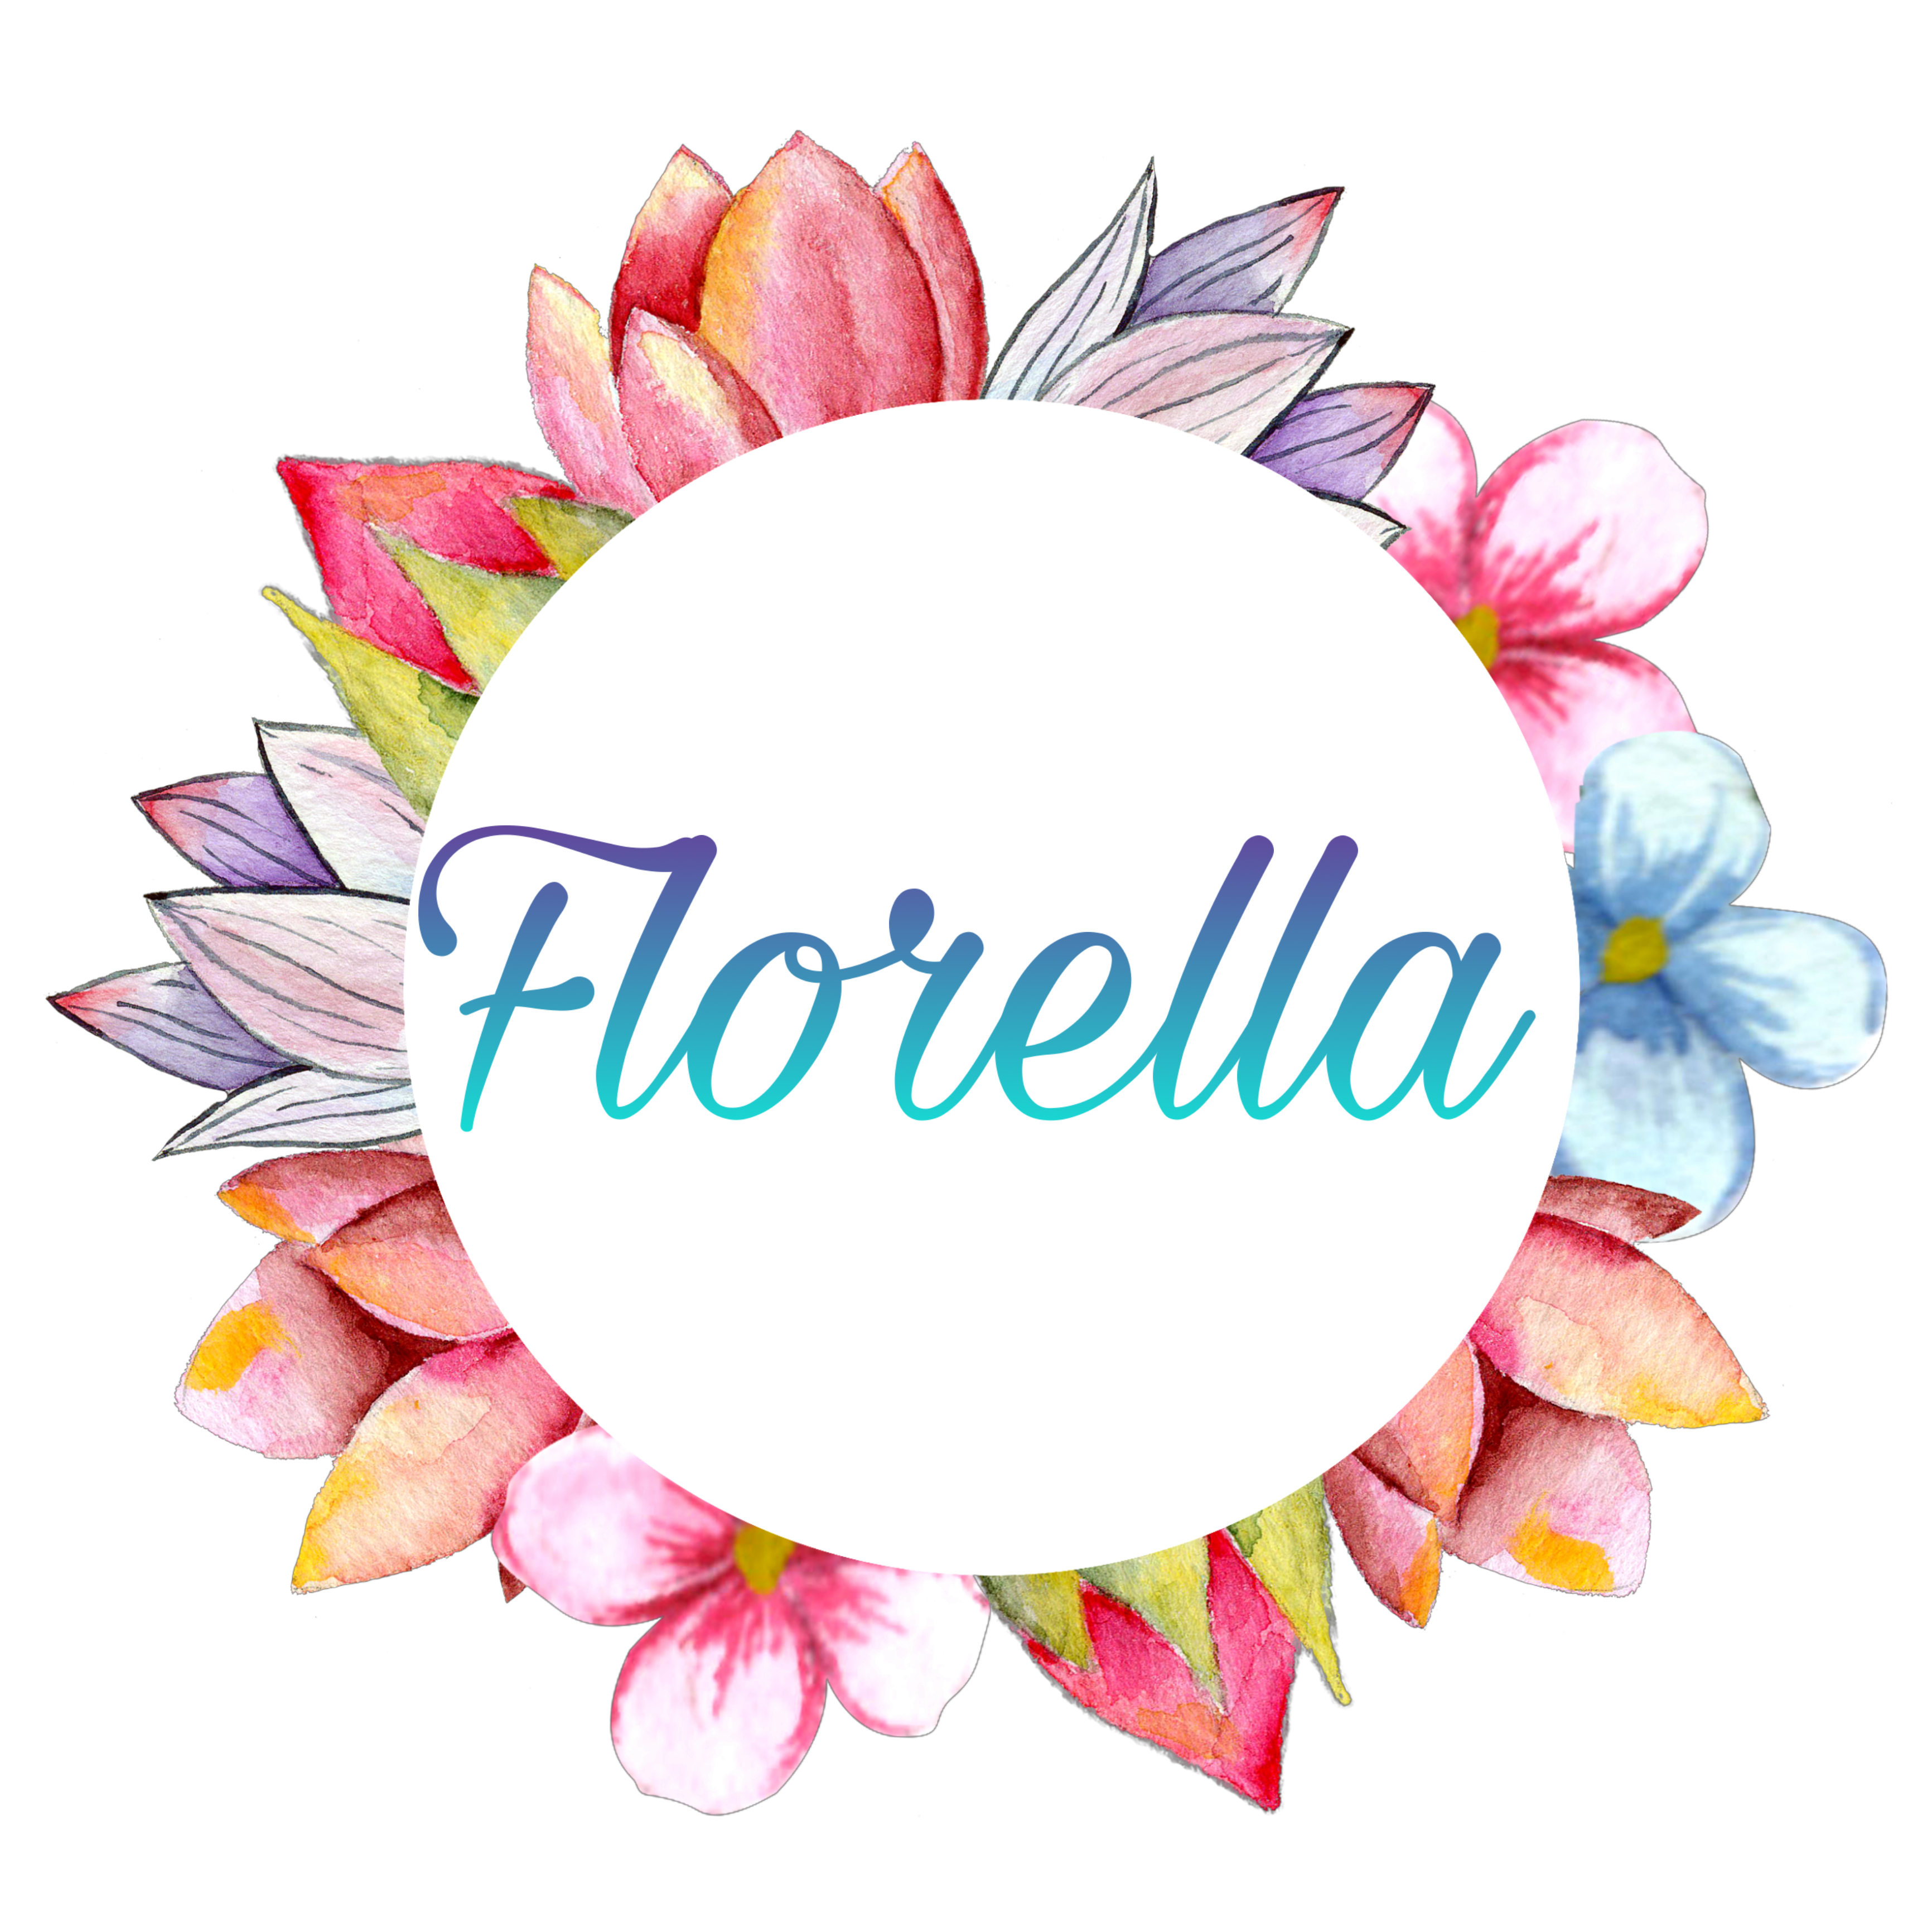 Florella